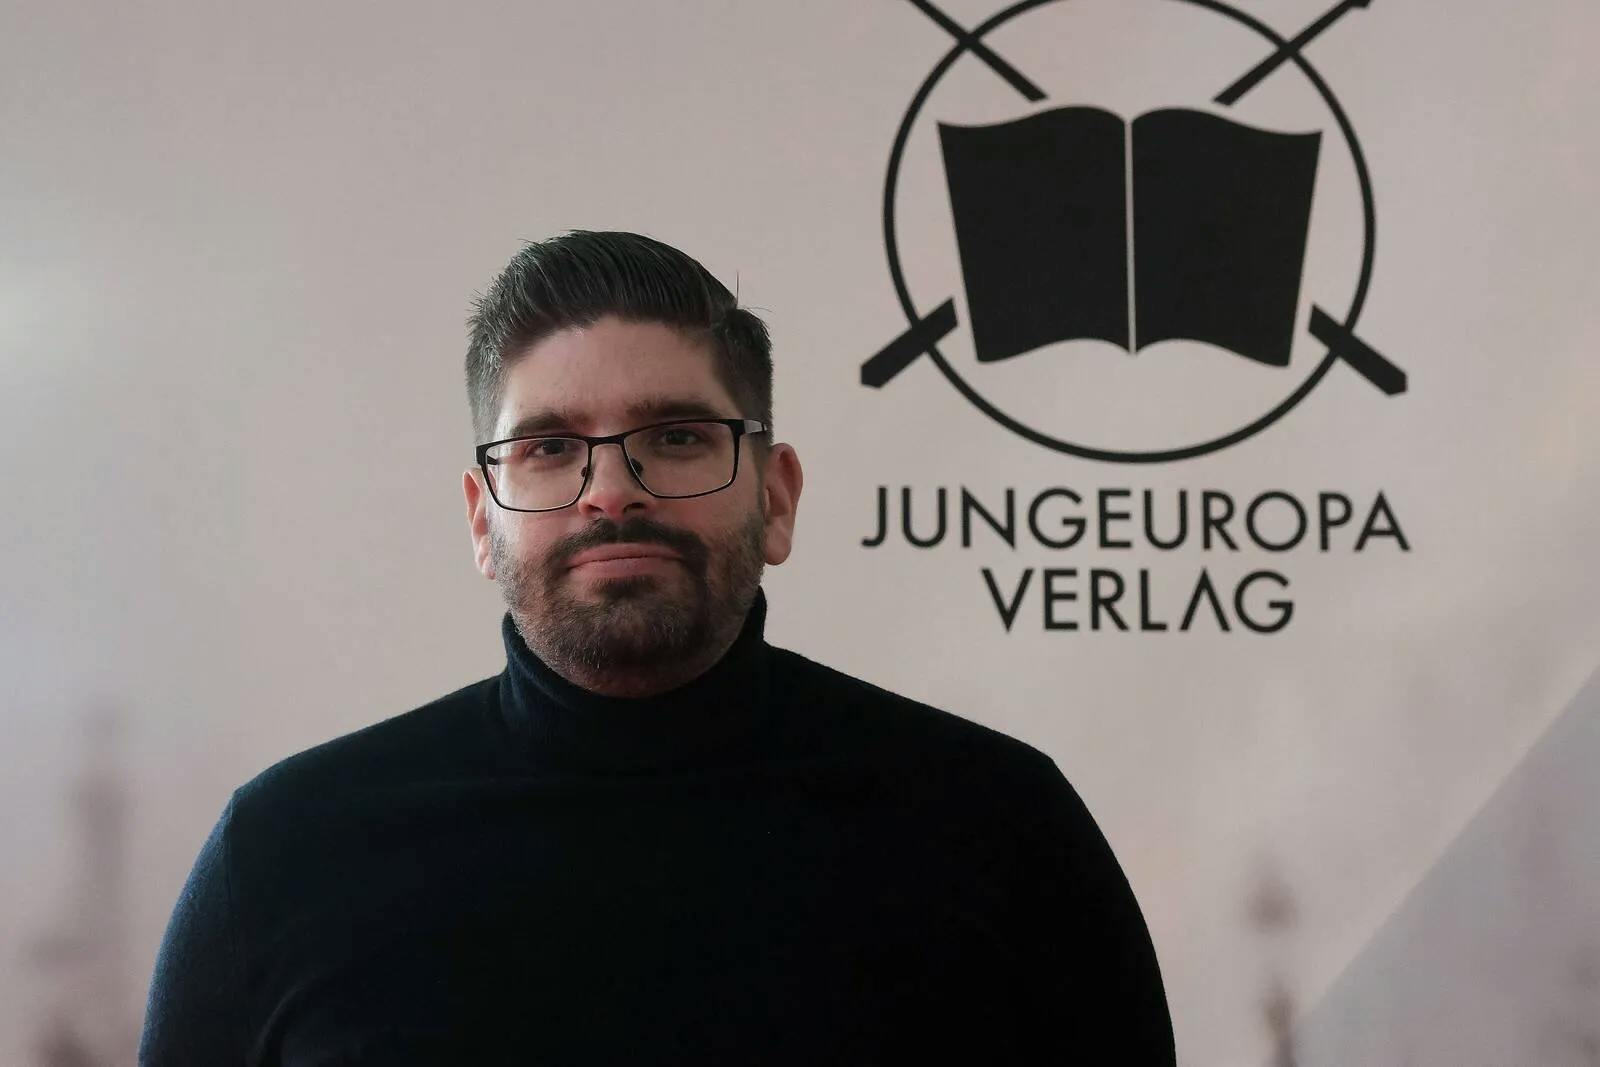 Jungeuropa Verlag: Droht dem jungen rechten Verlag ein Verbot?